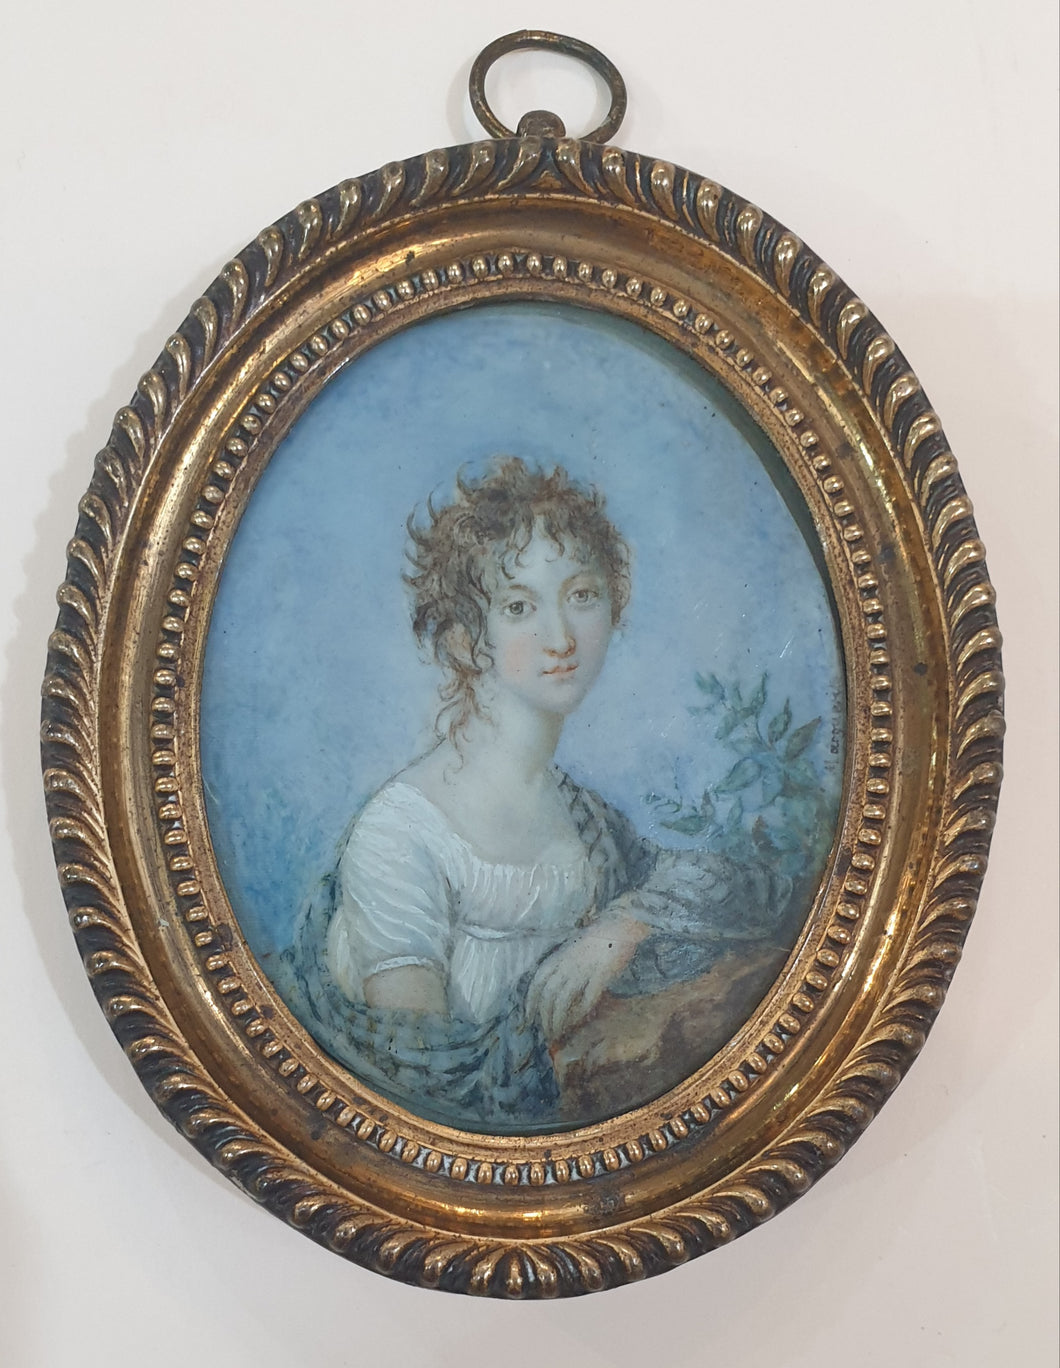 Caroline De Sedron Countess De Senan French School Early 19th.Century Portrait Miniature Circa. 1810.